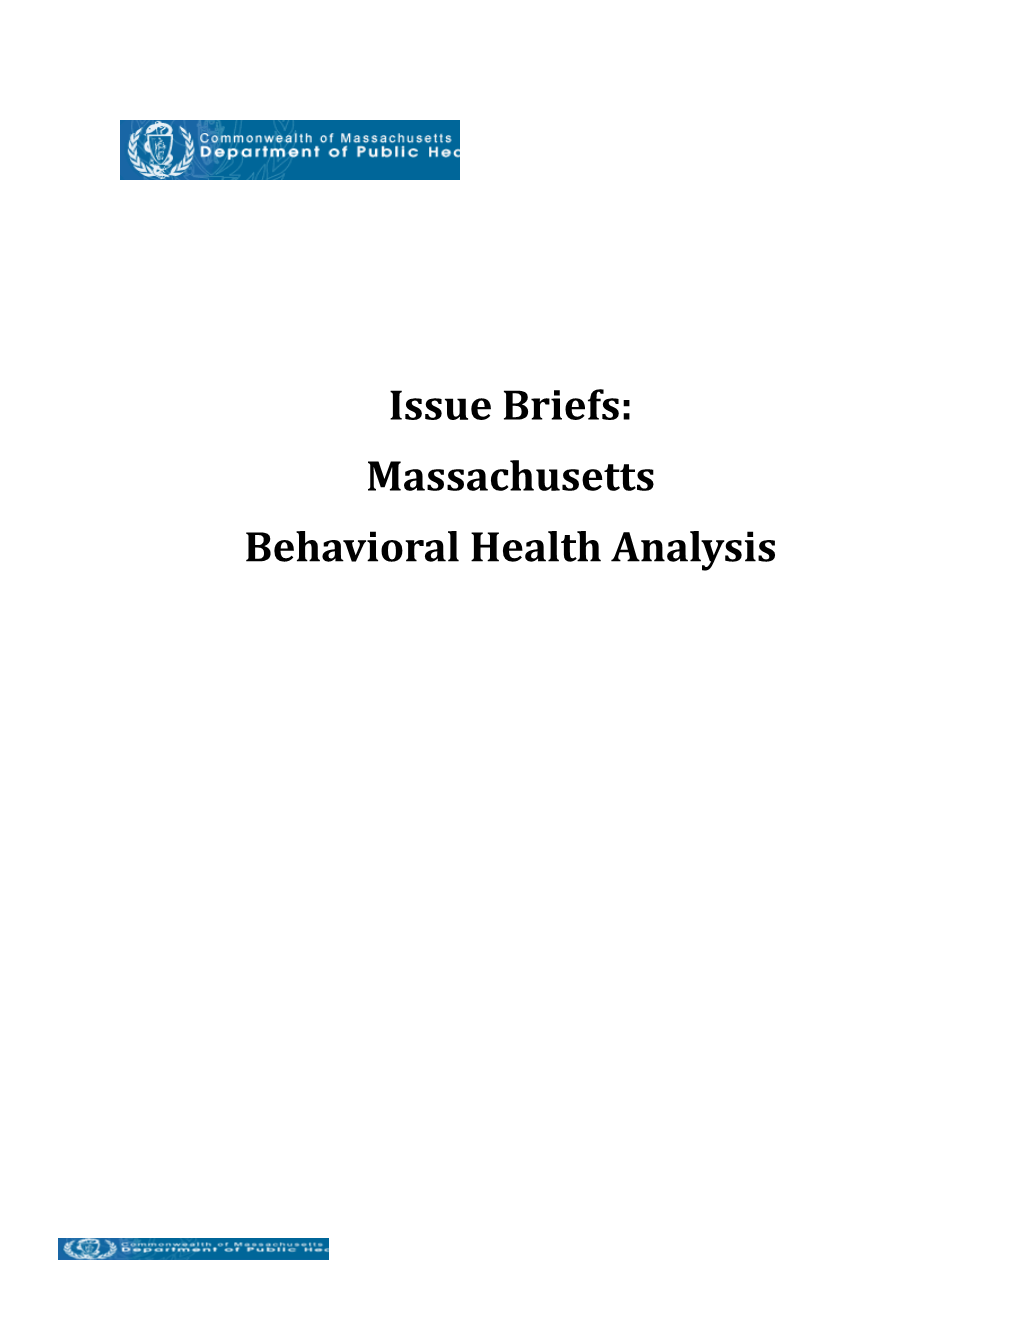 Issue Briefs: Massachusetts Behavioral Health Analysis Veterans Over the Last Decade